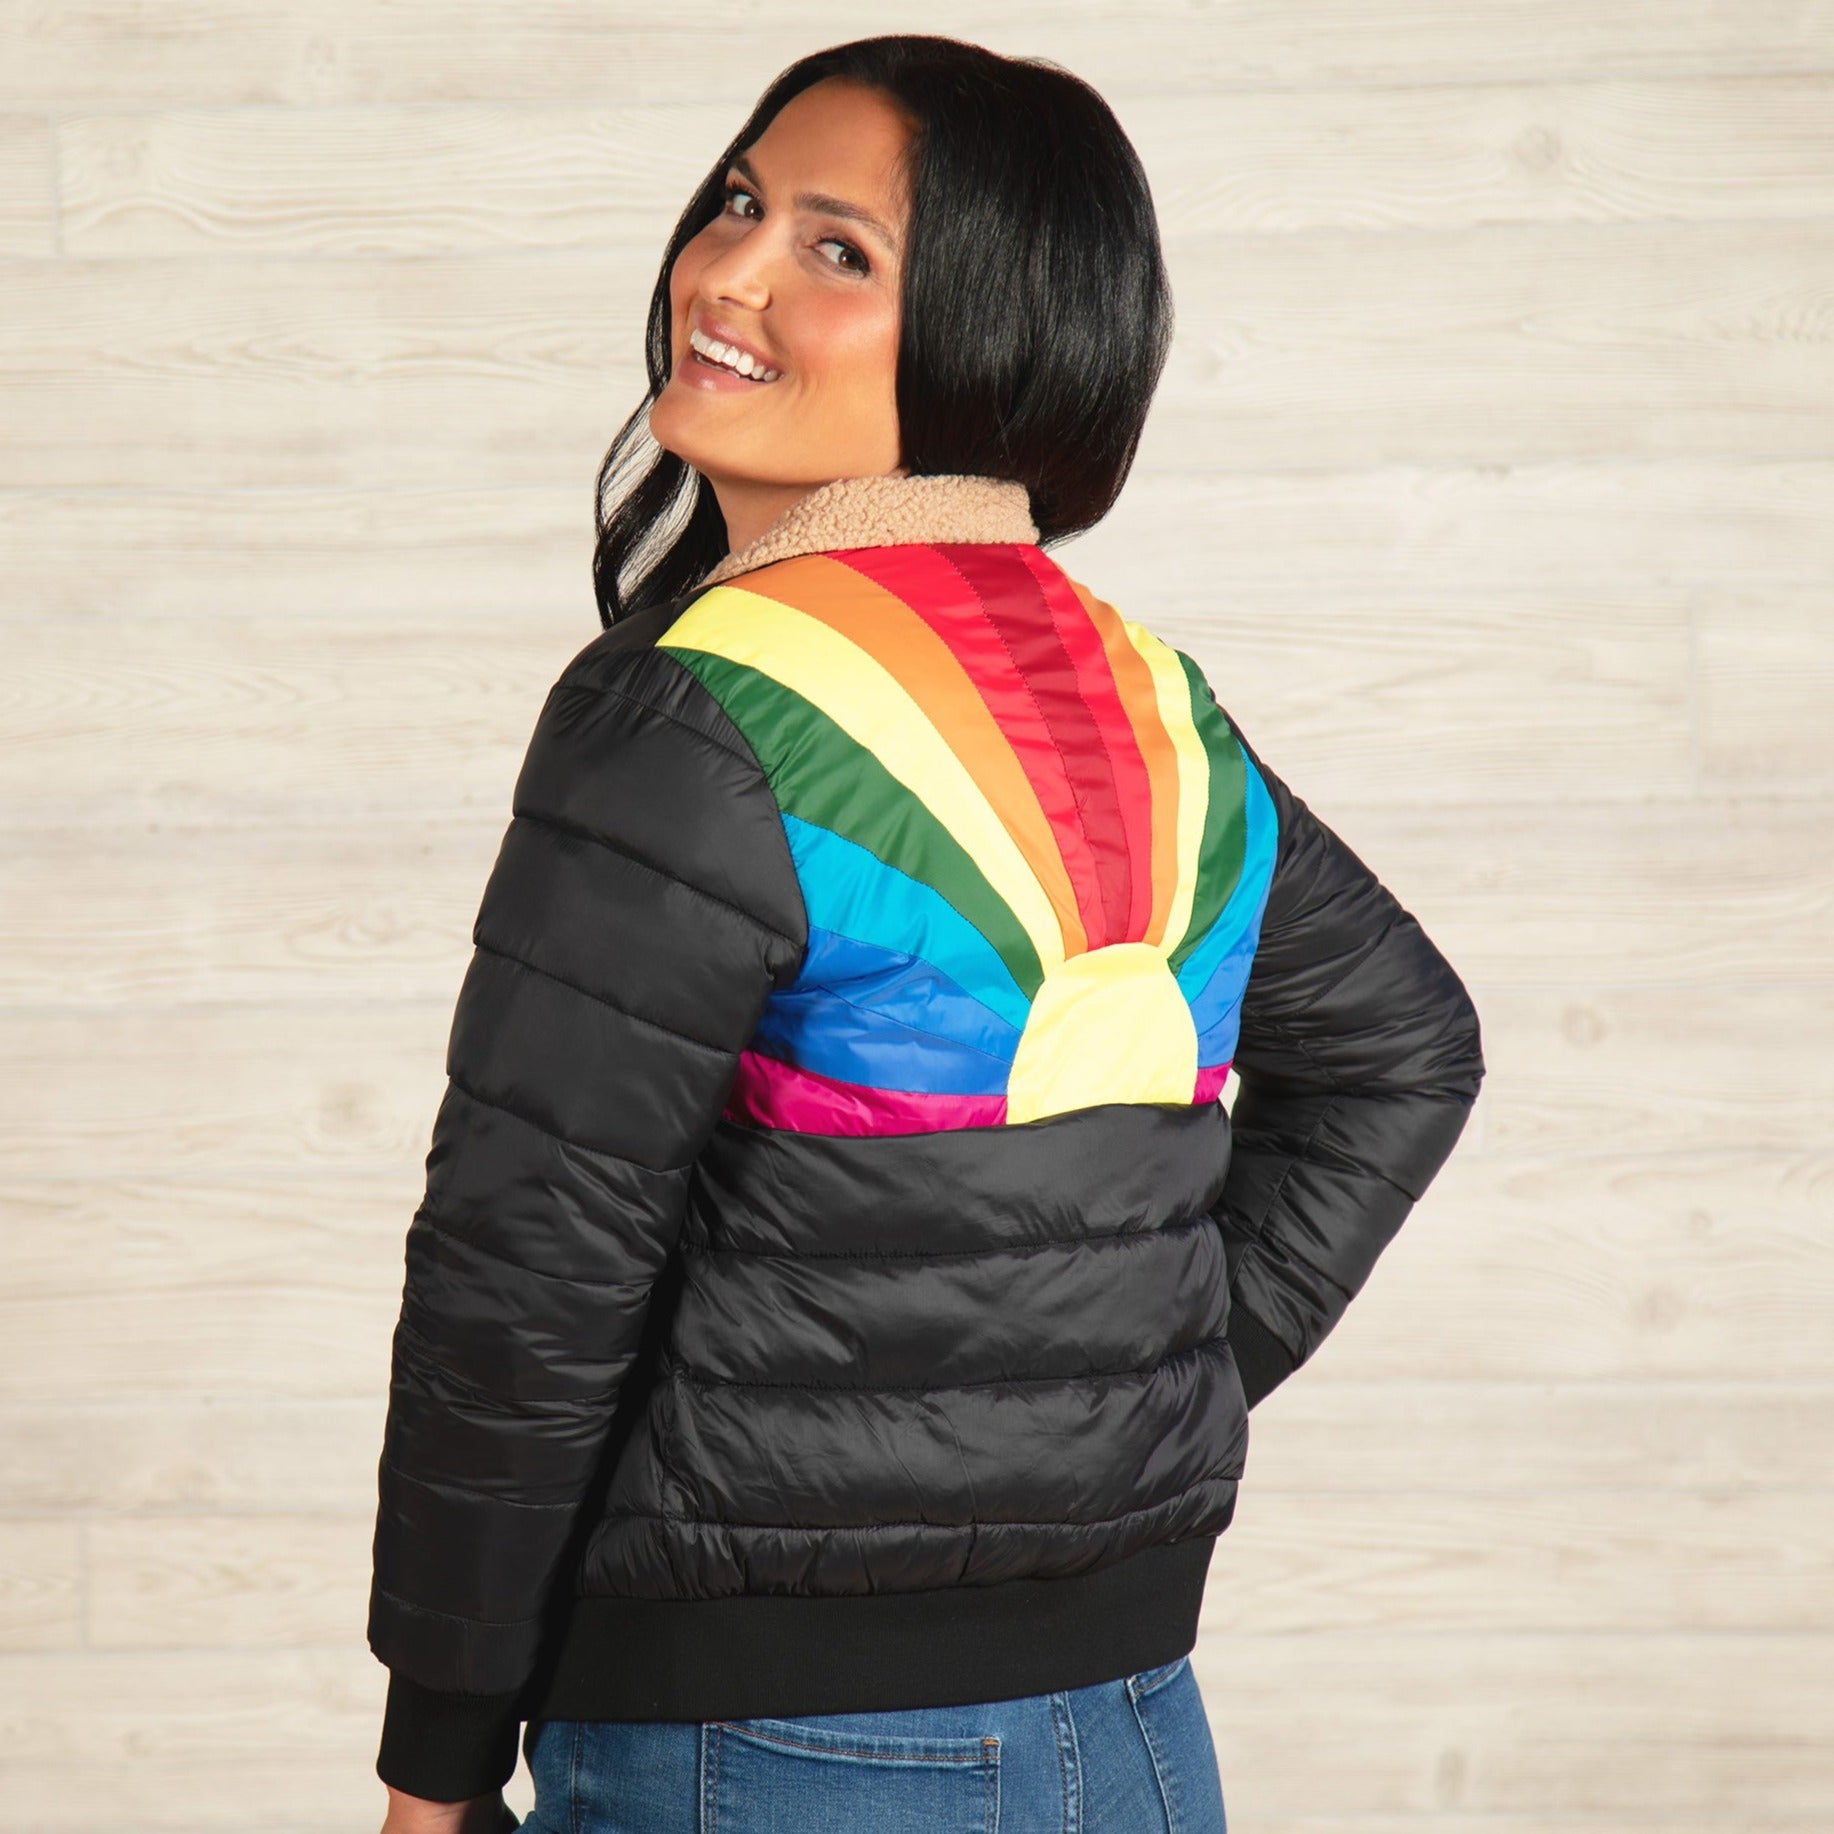 Chasing Rainbows Retro Stripe Insulated Jacket - Black - M